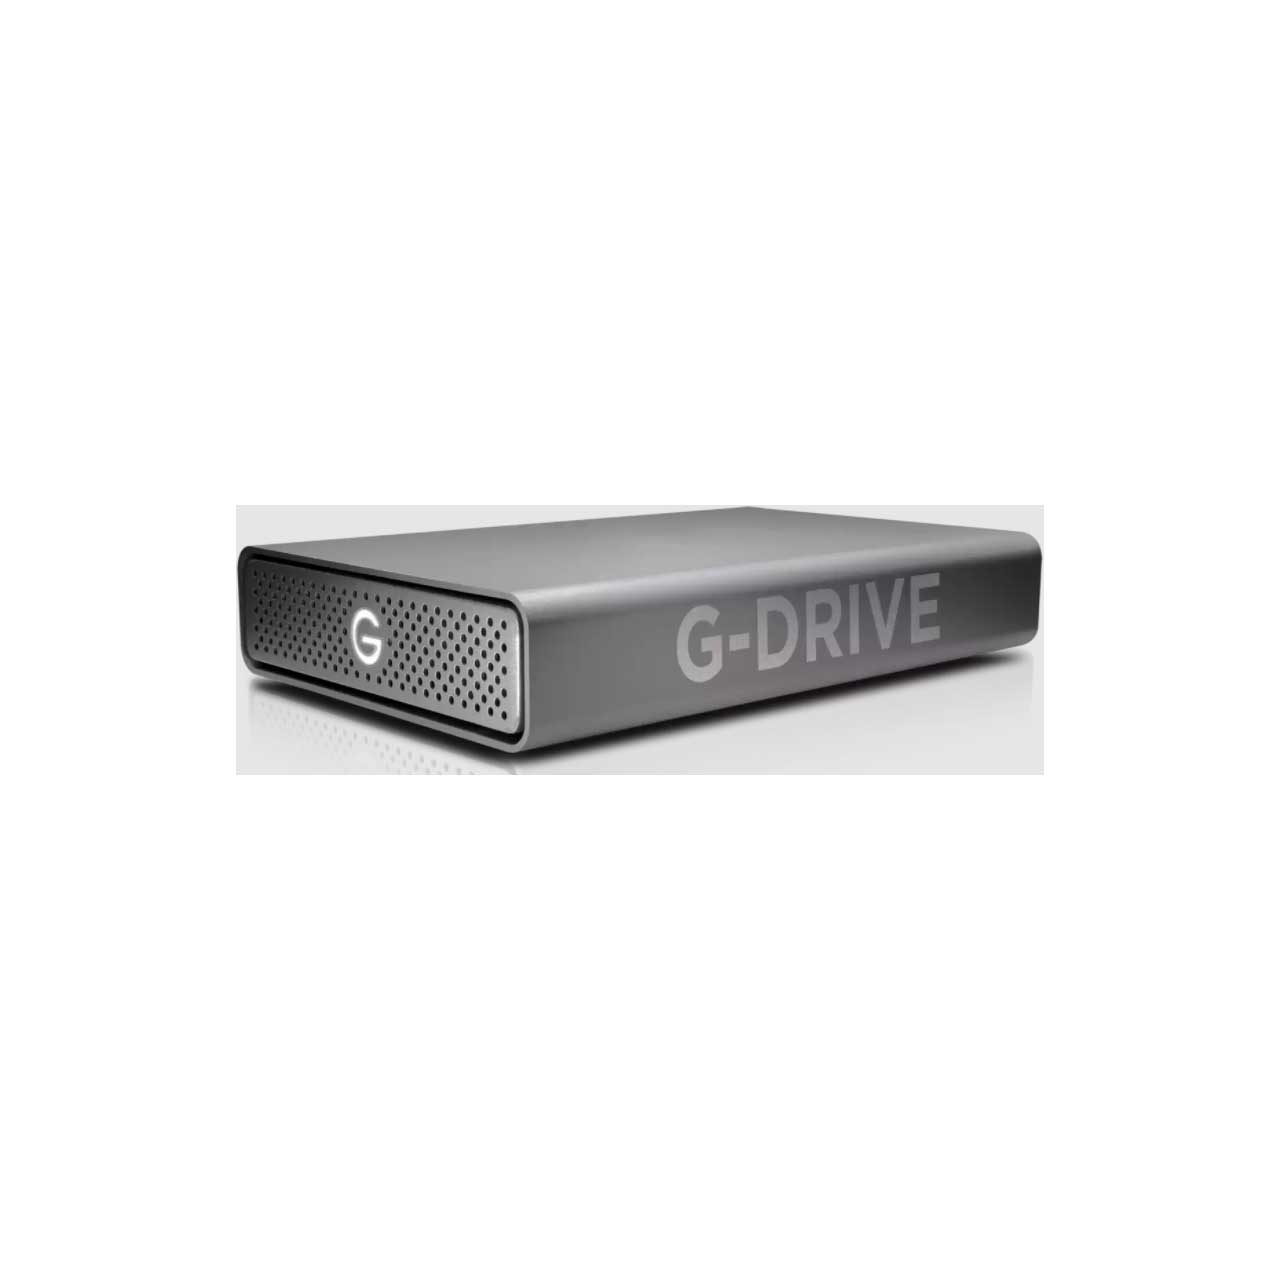 SanDisk Professional 12TB G-DRIVE Enterprise-Class USB 3.2 Gen 1 External Hard Drive G-DRIVE 12TB